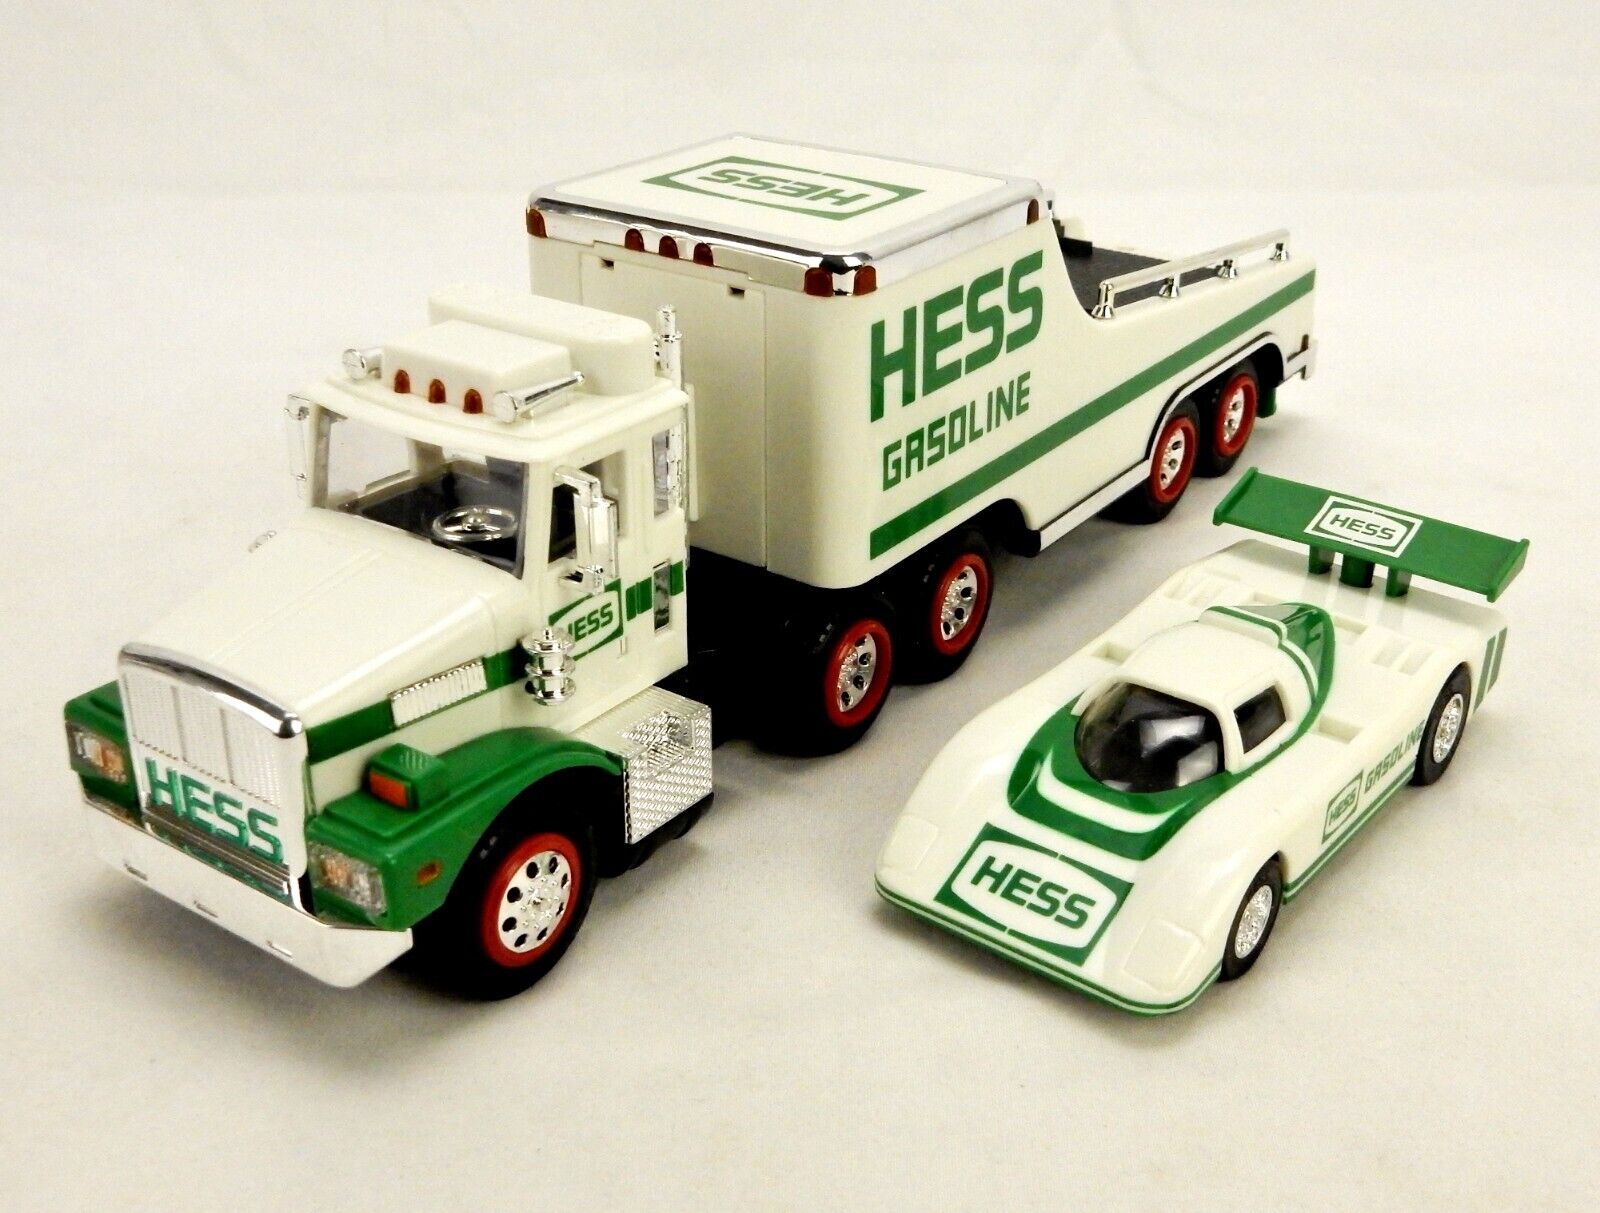 HESS Gasoline 2003 Toy Trailer Truck w/Sport Race Car, Die Cast Plastic, DCT-34